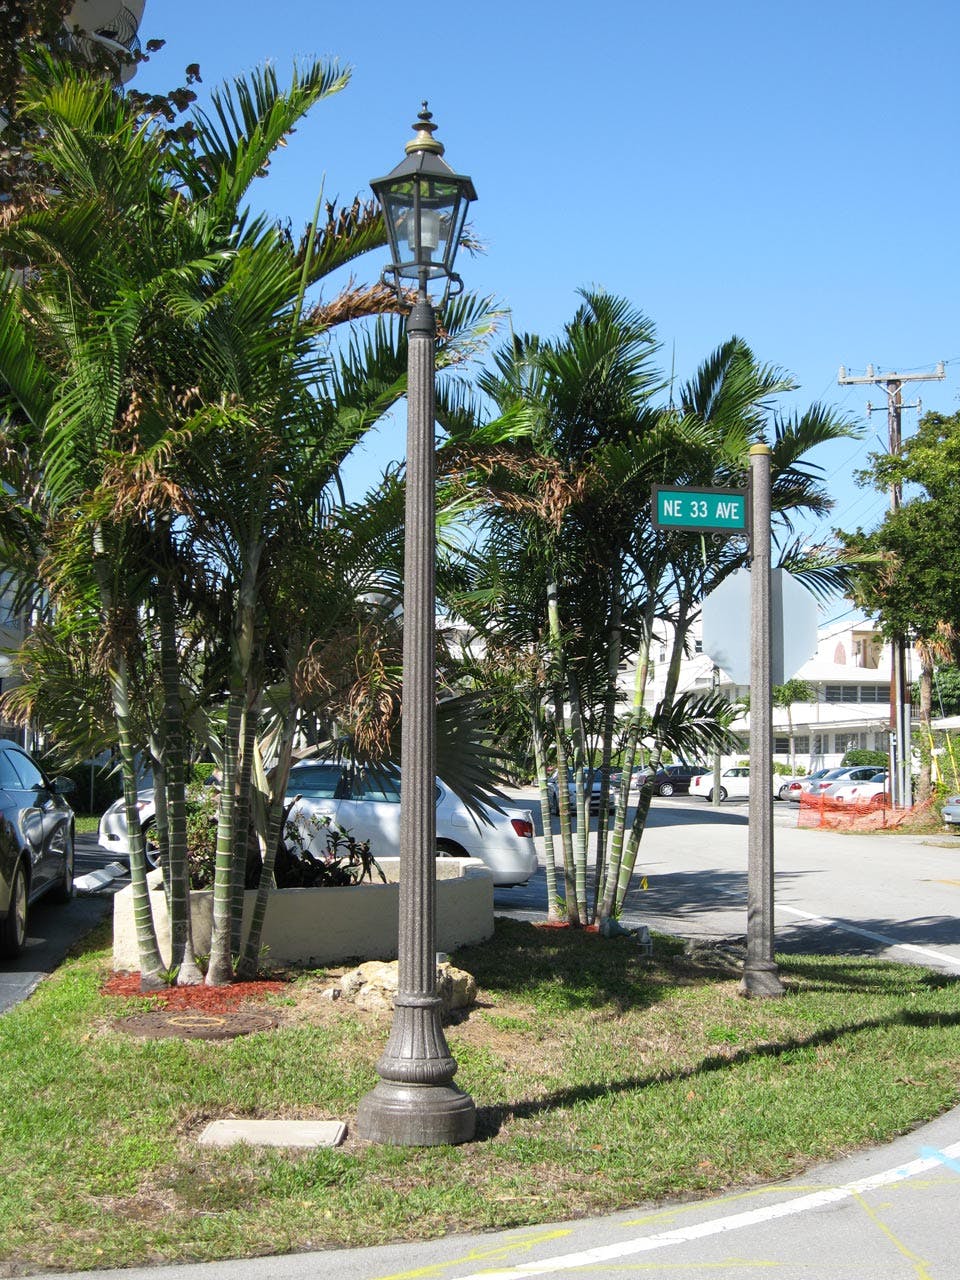 Street light pole and matching street sign pole